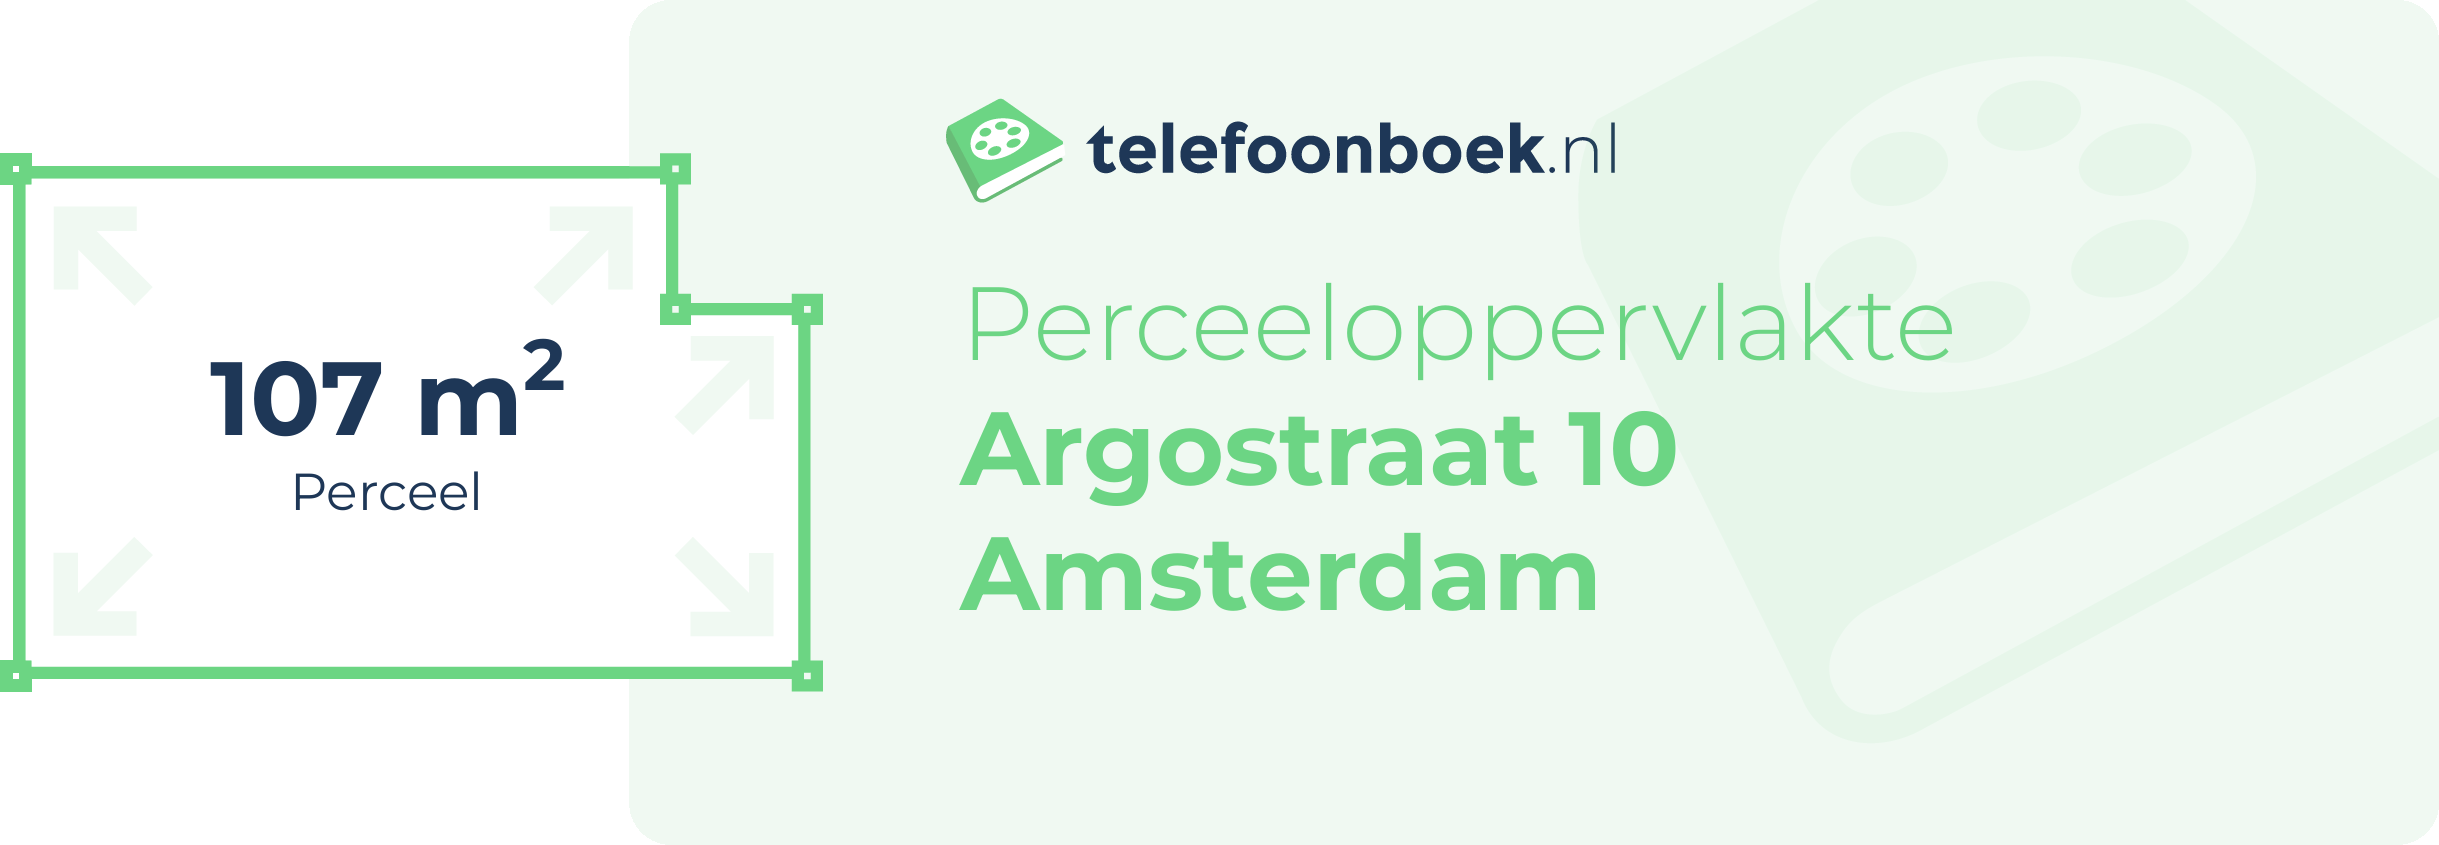 Perceeloppervlakte Argostraat 10 Amsterdam